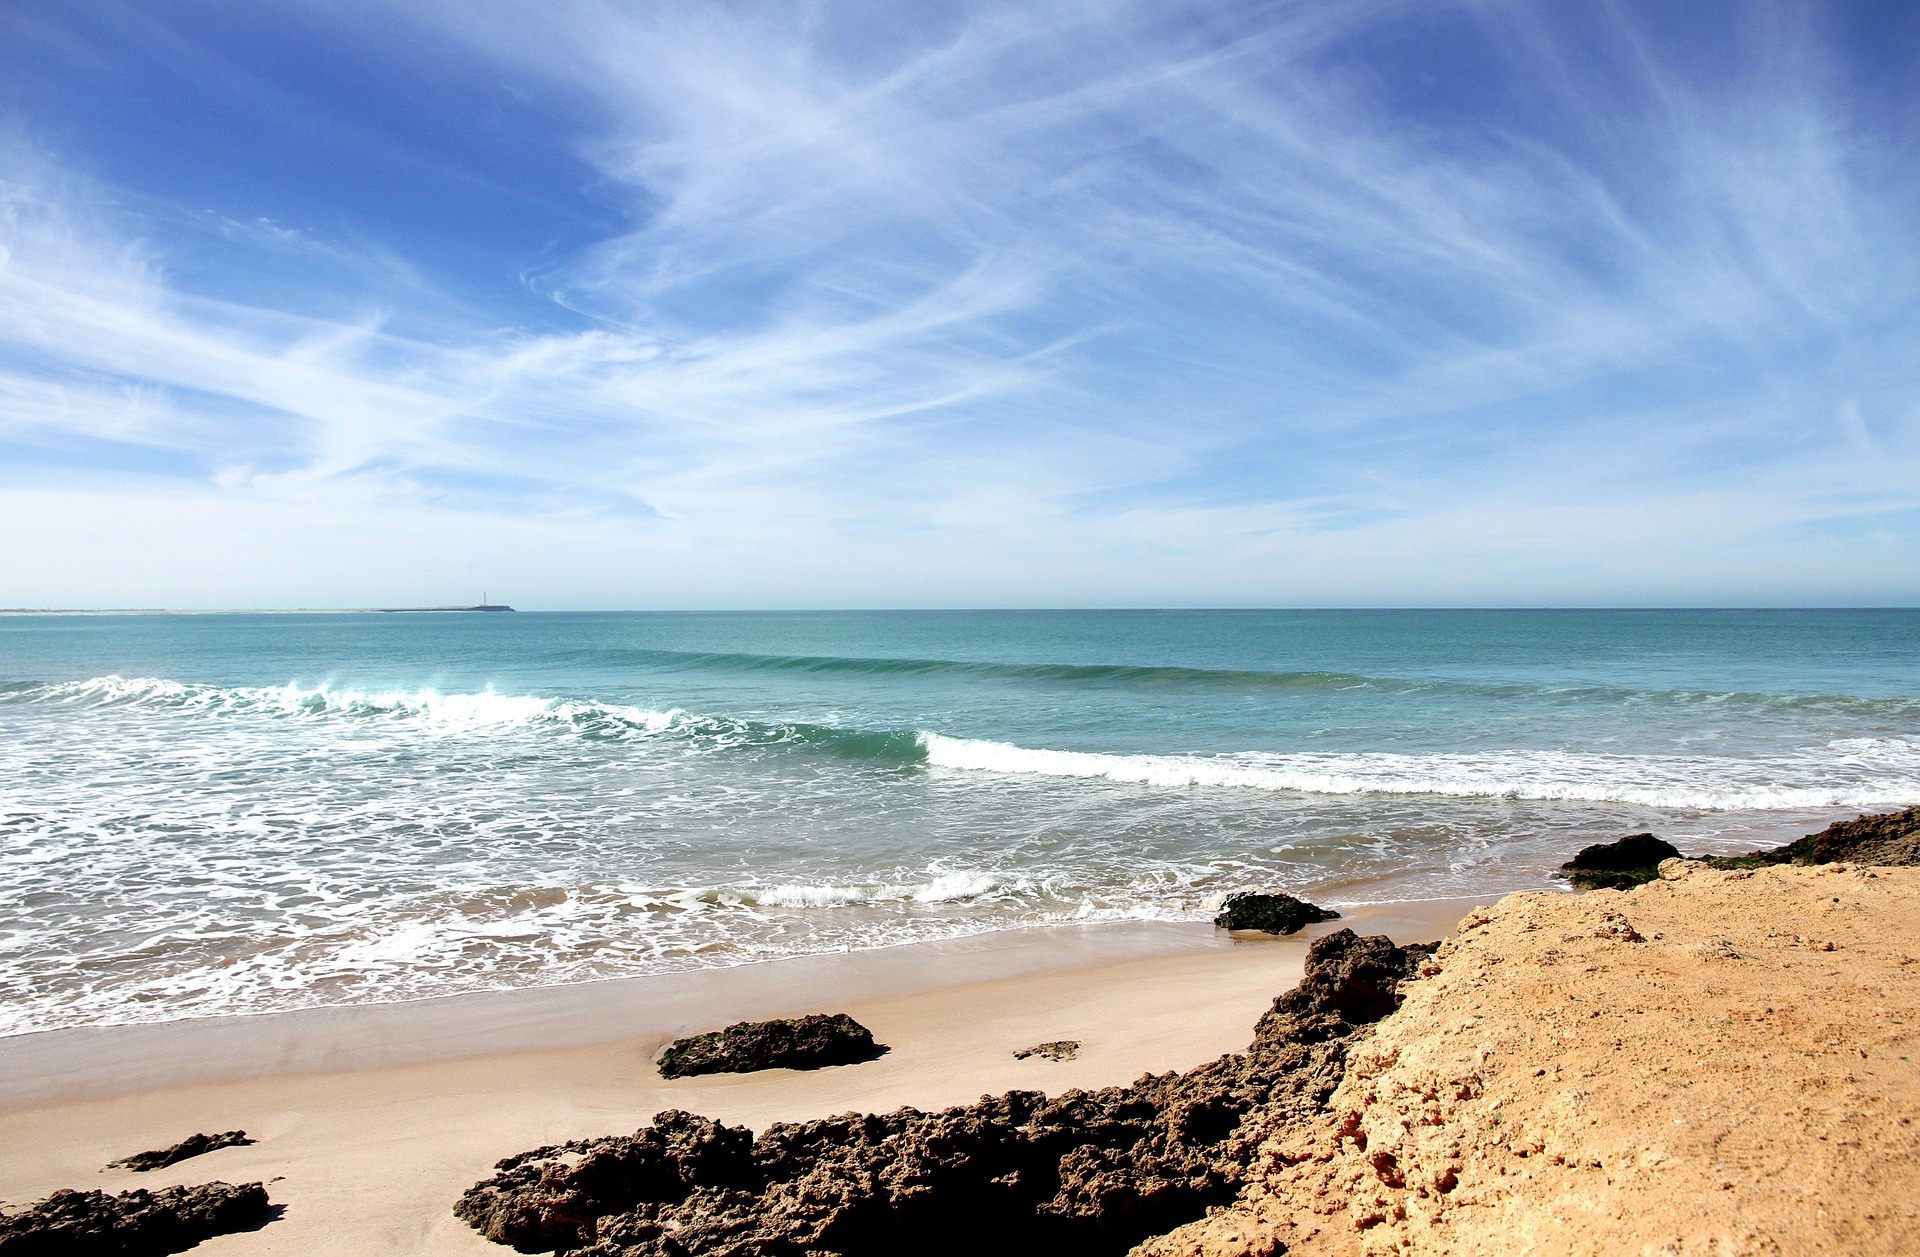 1 Woche Urlaub in Marokko Agadir günstig buchen ab 105,00€